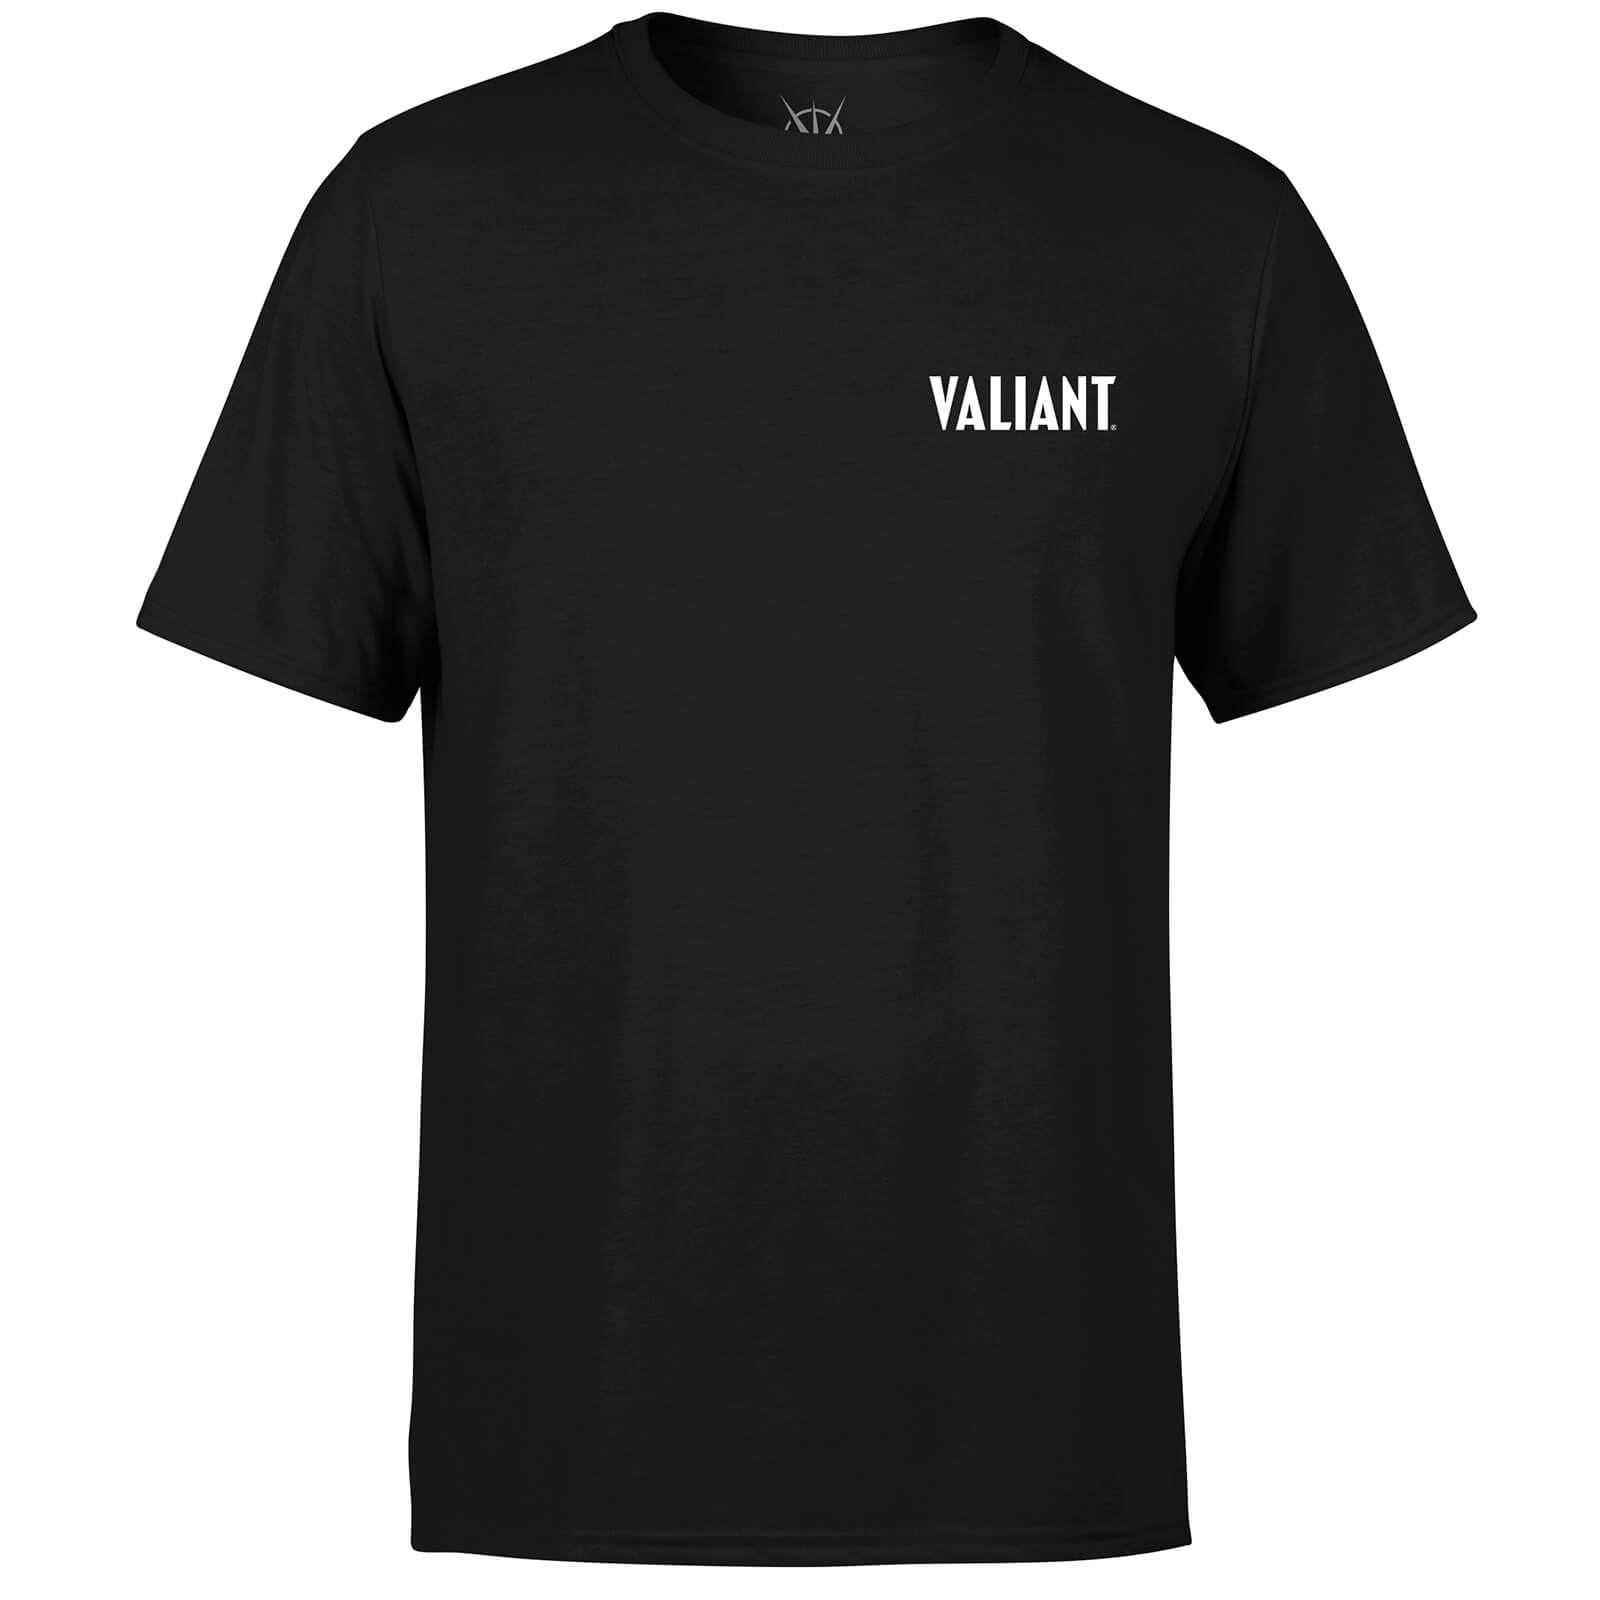 Valiant Comics Logo Text Pocket T-Shirt - Black - S - Black